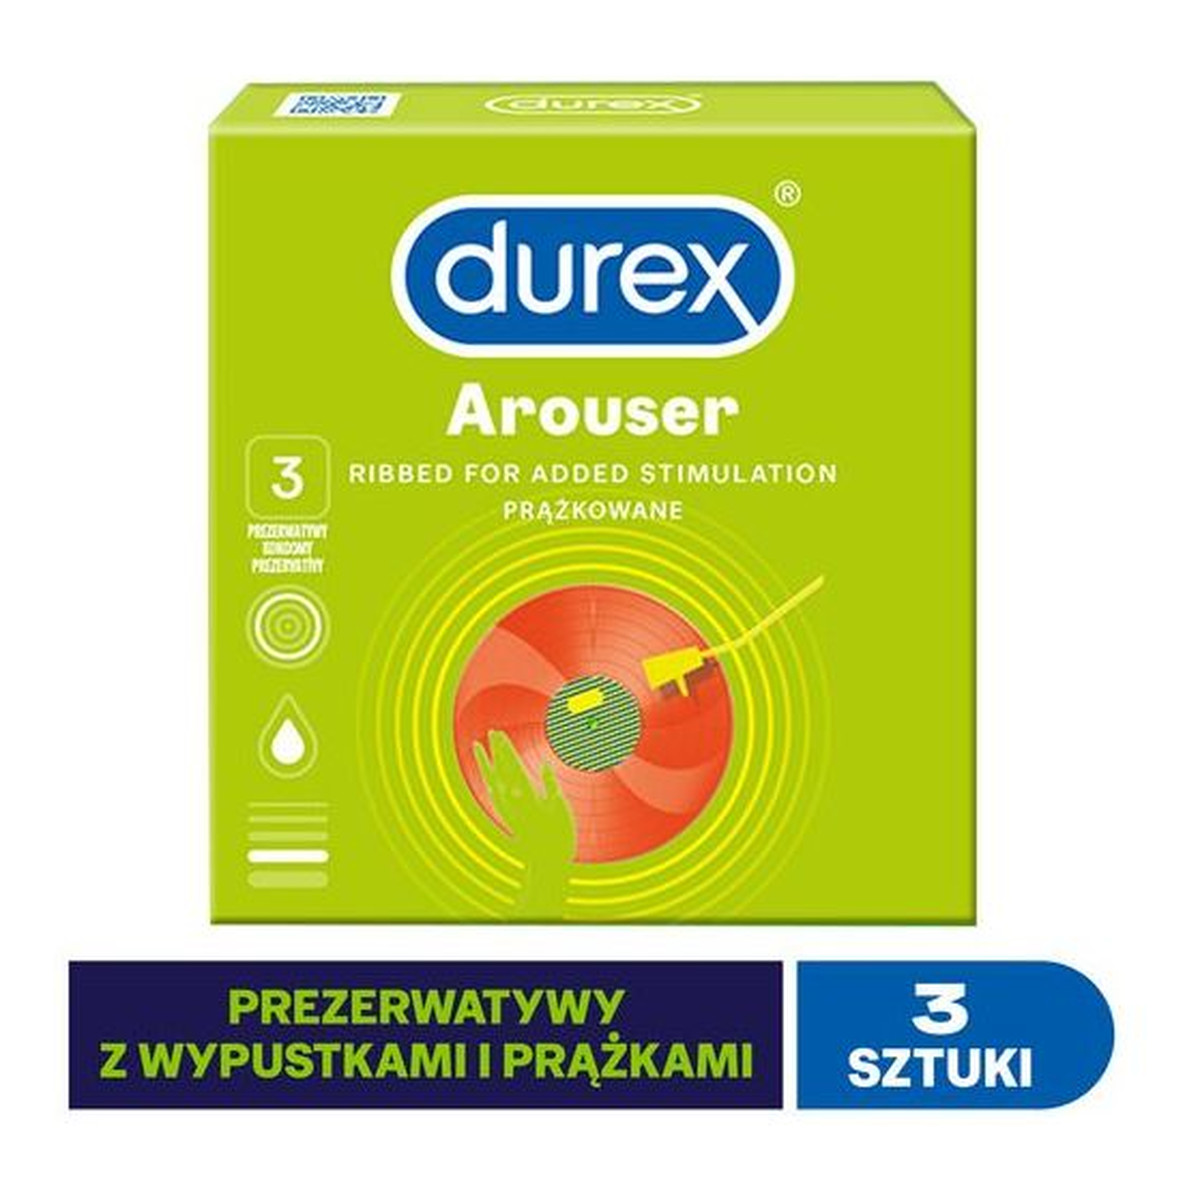 Durex Arouser Prezerwatywy 3szt.